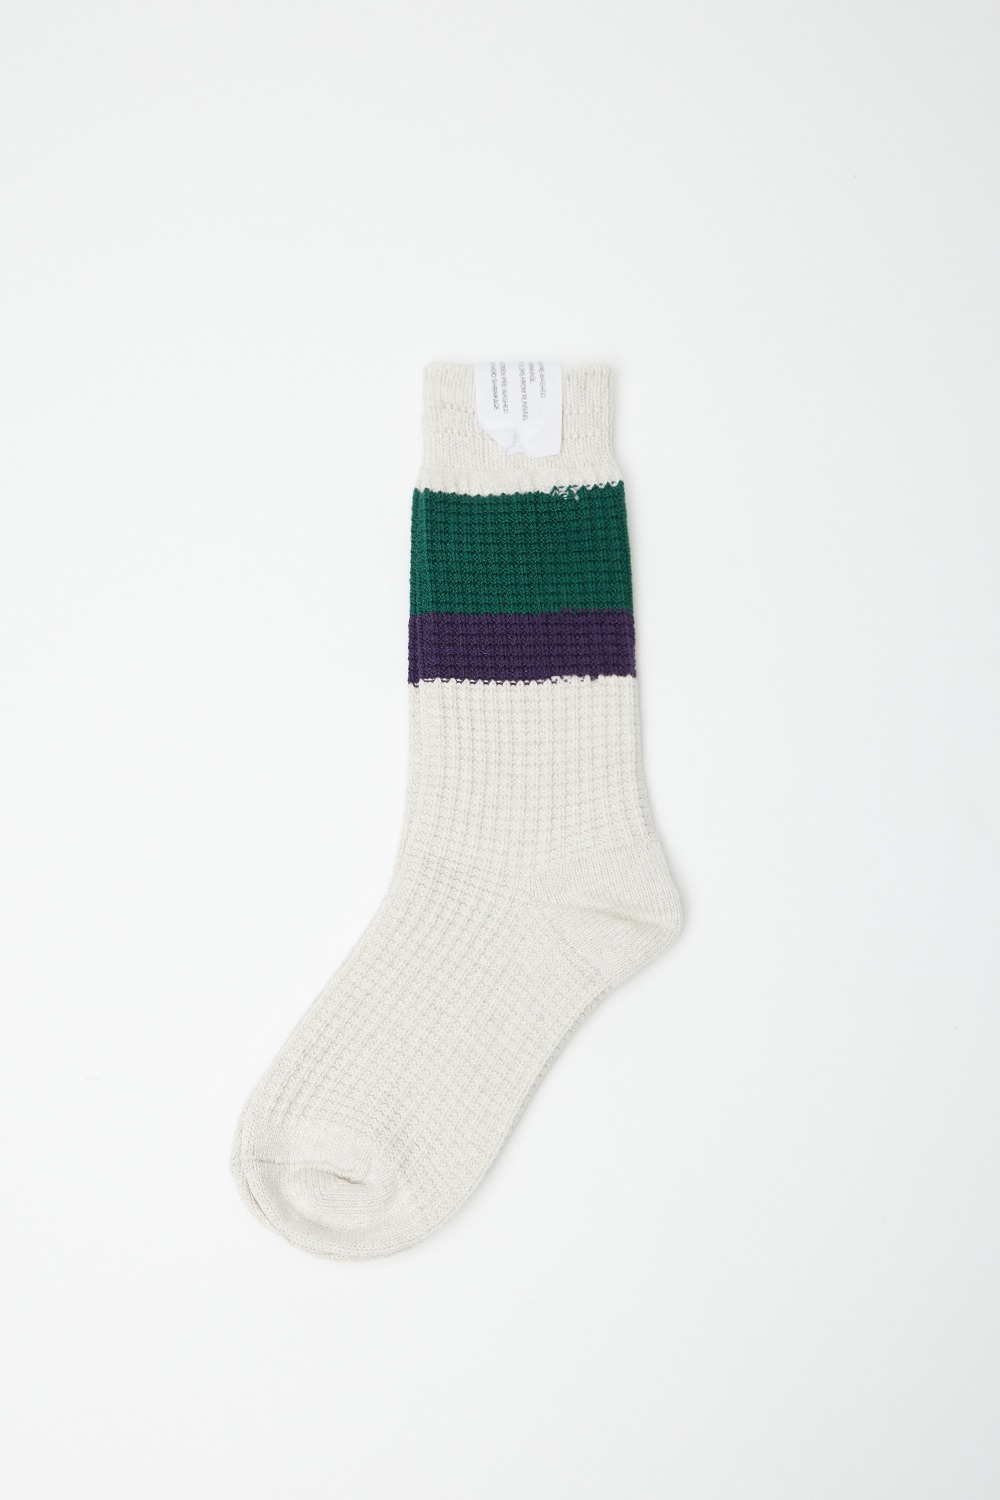 UH0596 Socks - Oatmeal